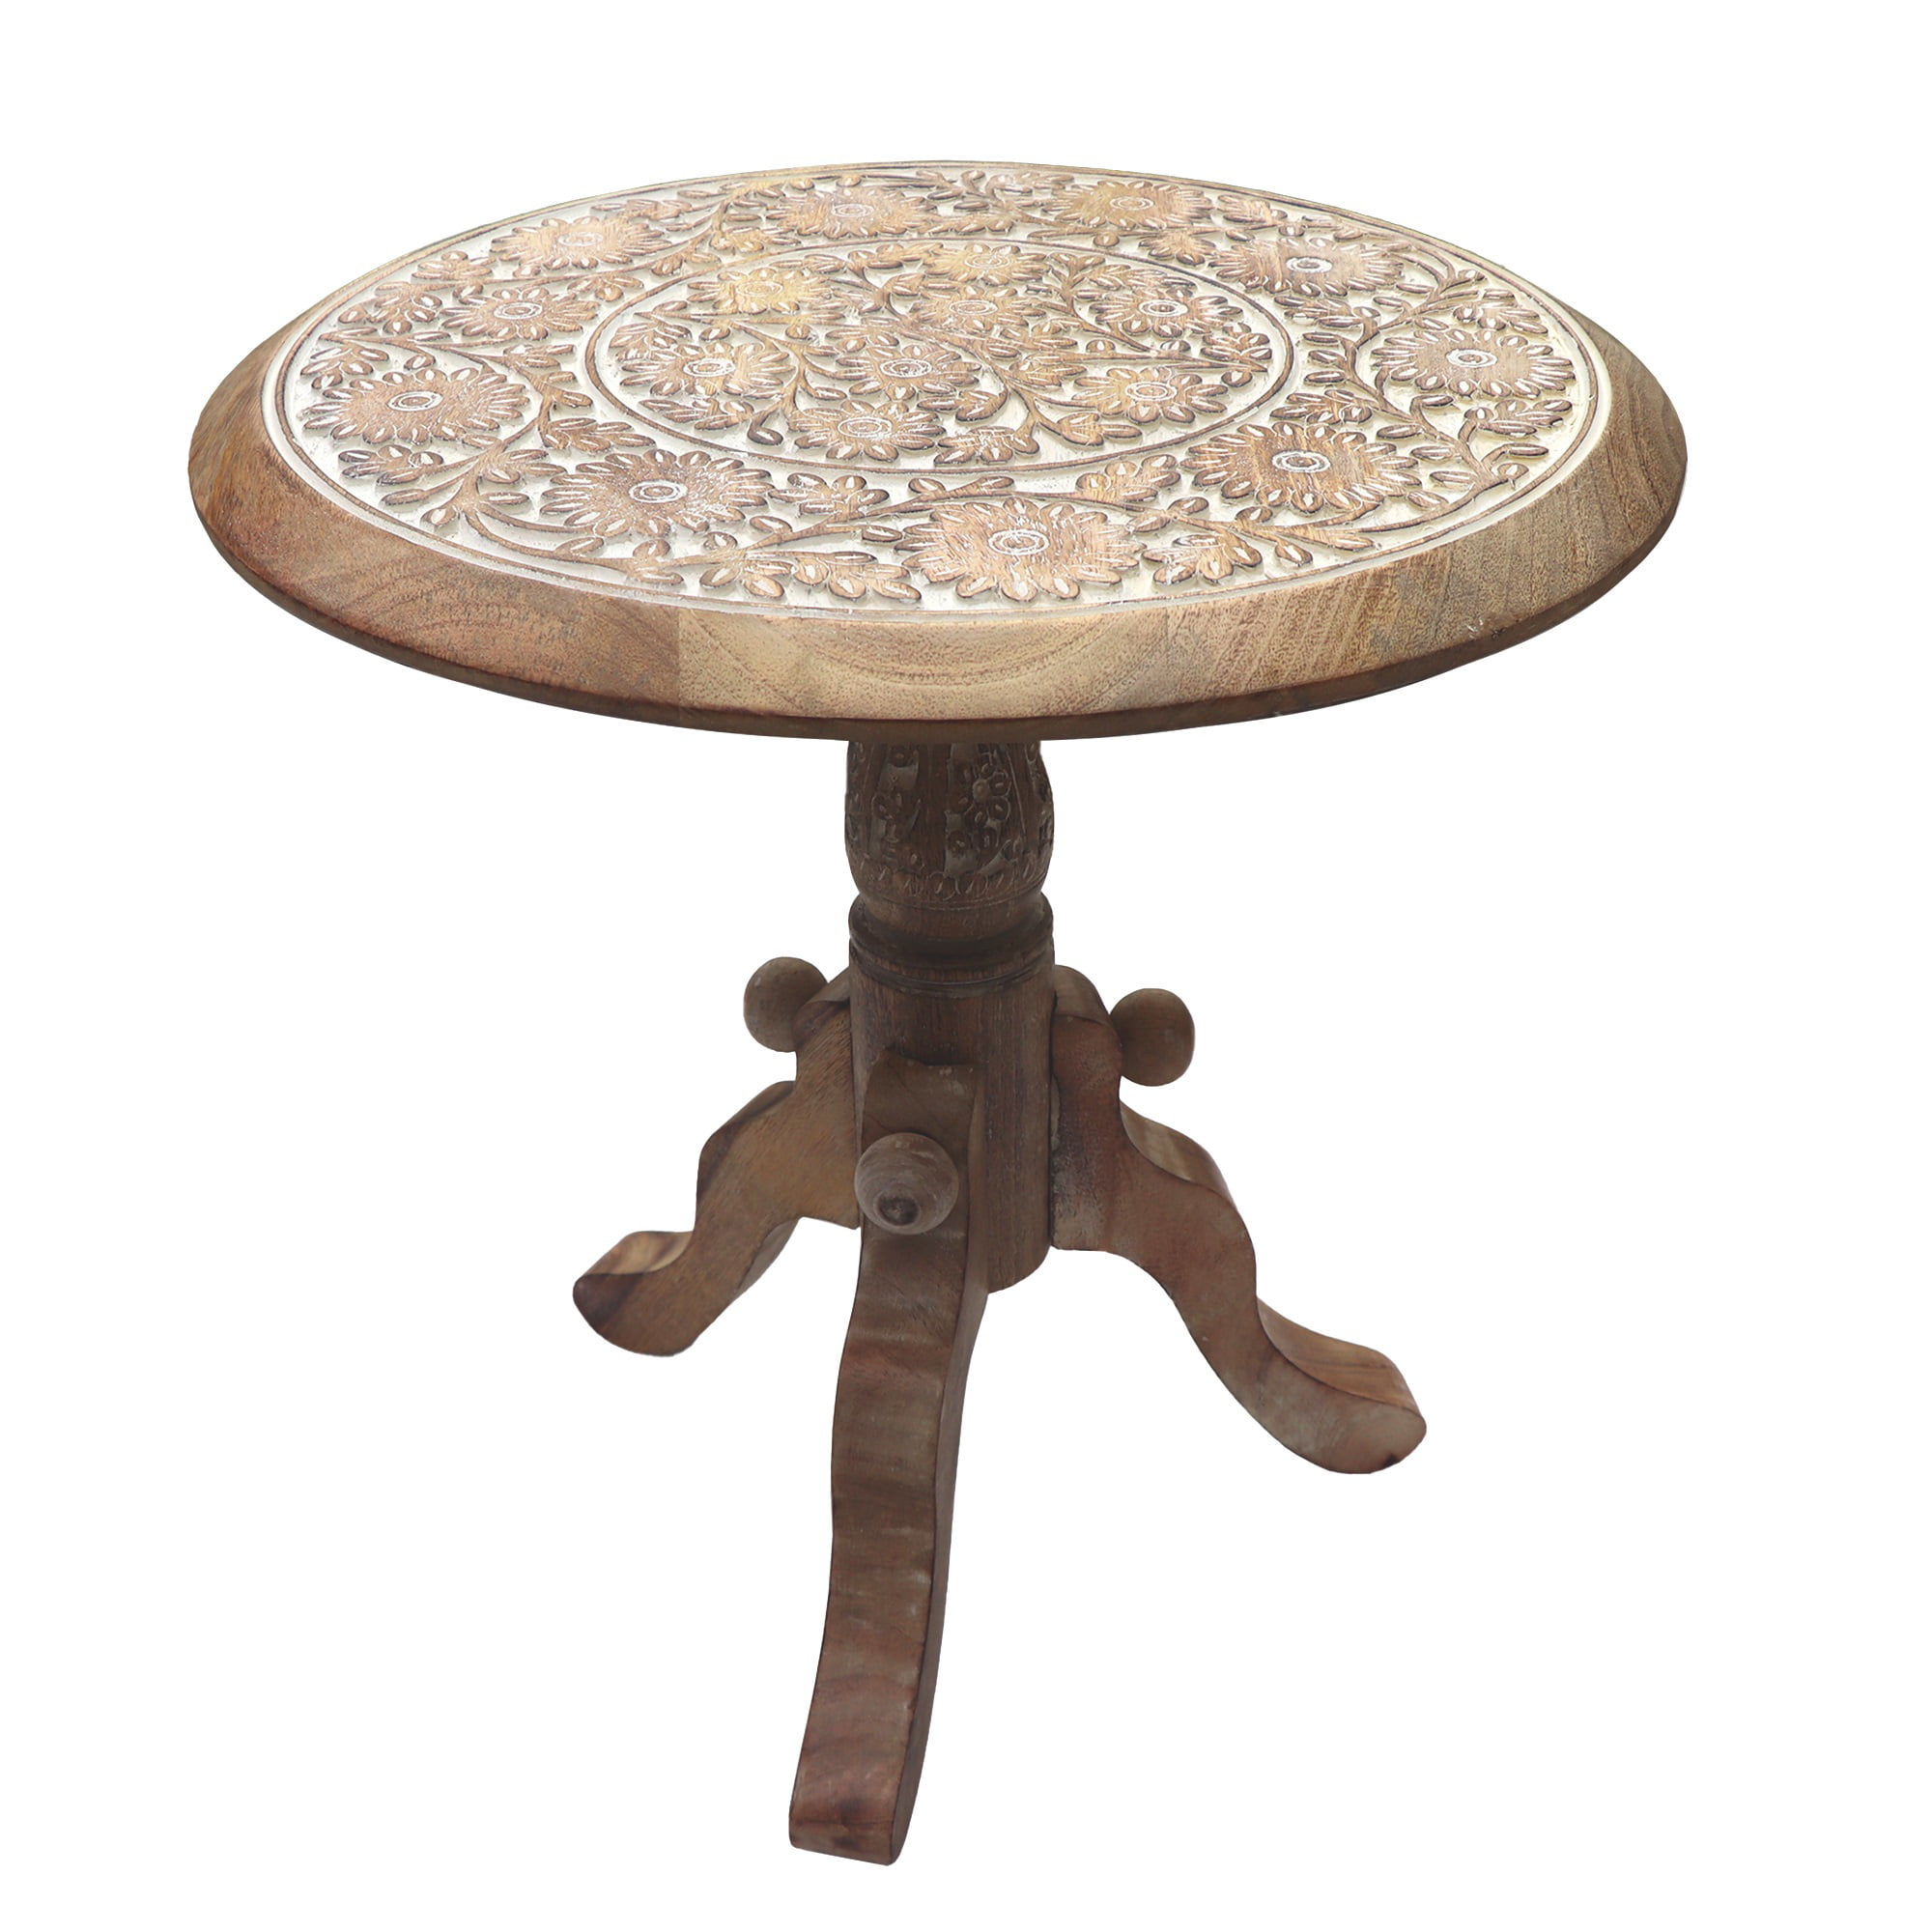 Furniture of America Ehtel Octagon Pedestal Table in Teal 